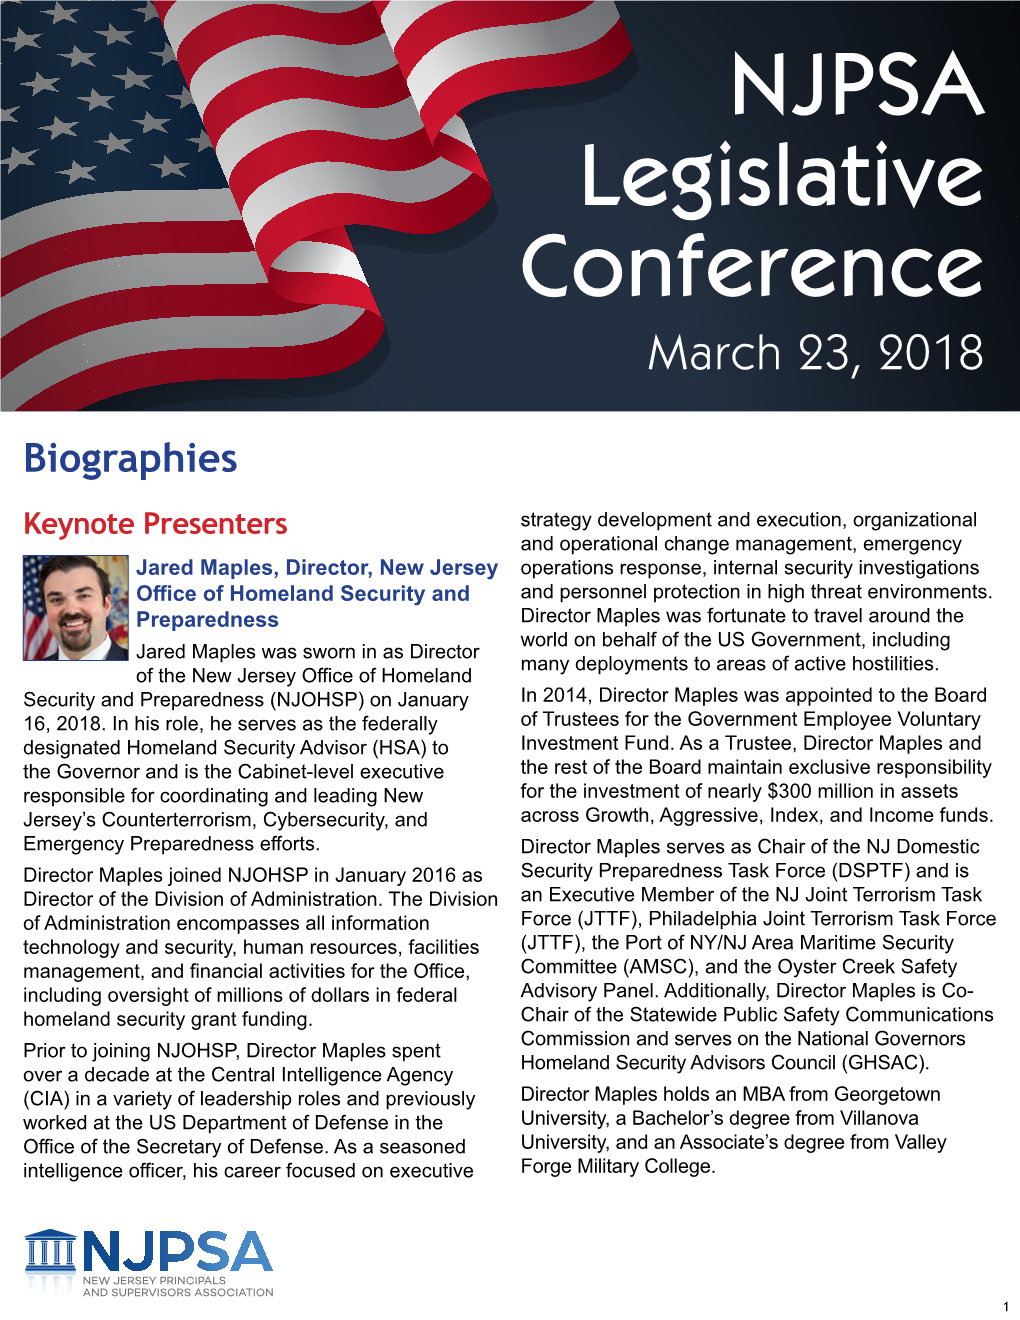 NJPSA Legislative Conference March 23, 2018